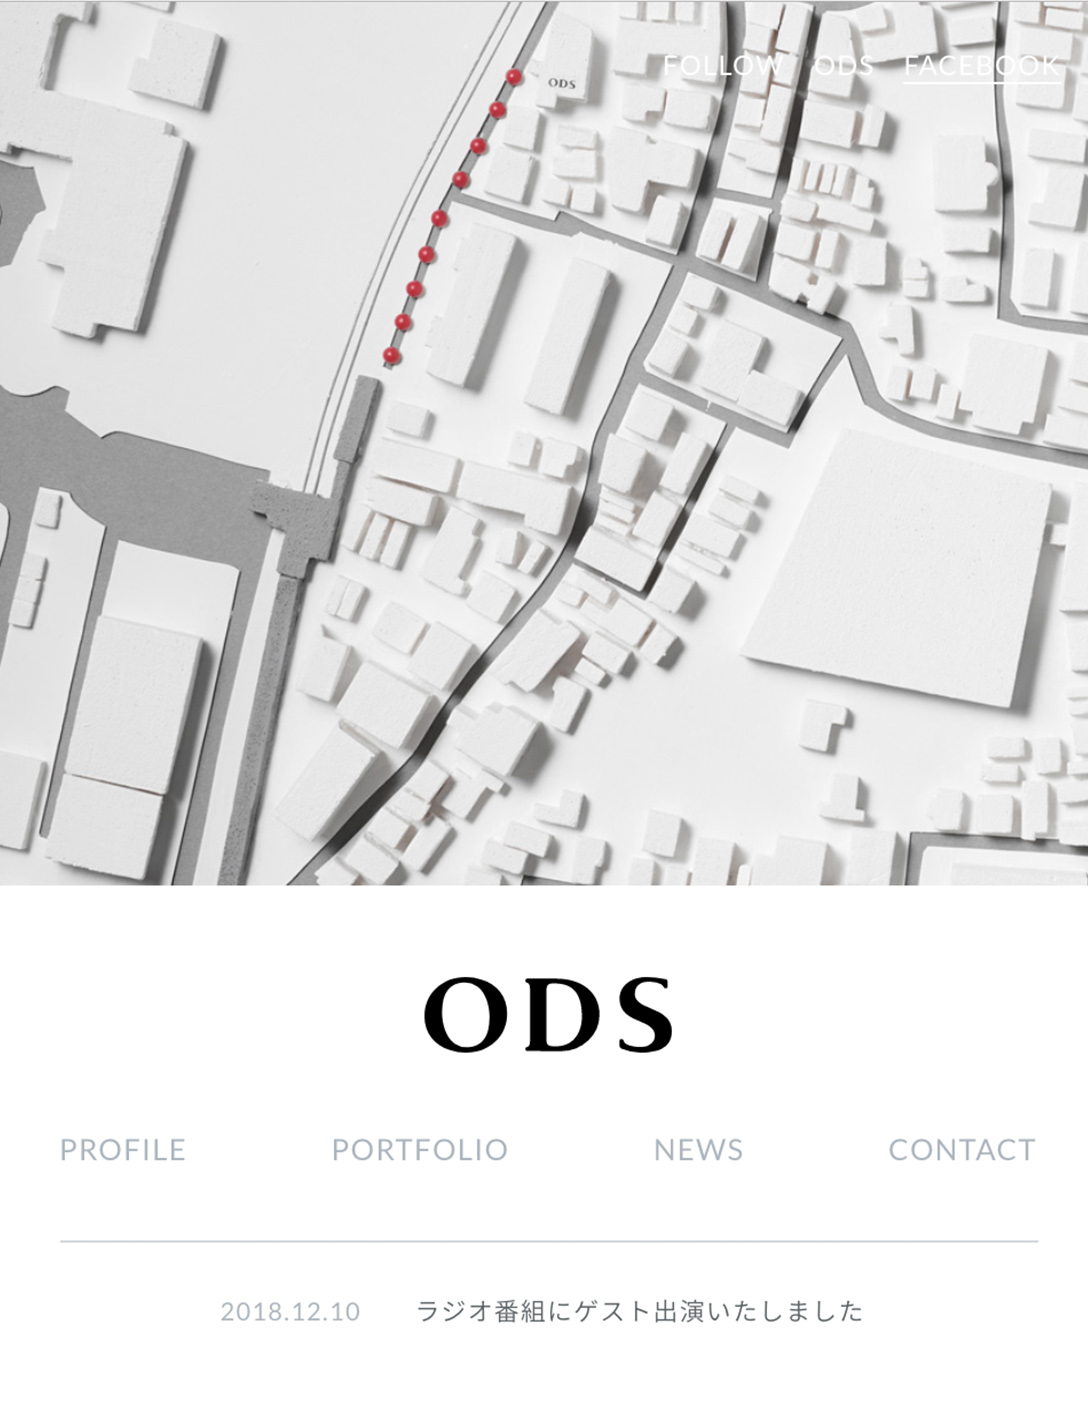 Oniki Design Studio (ODS) Website